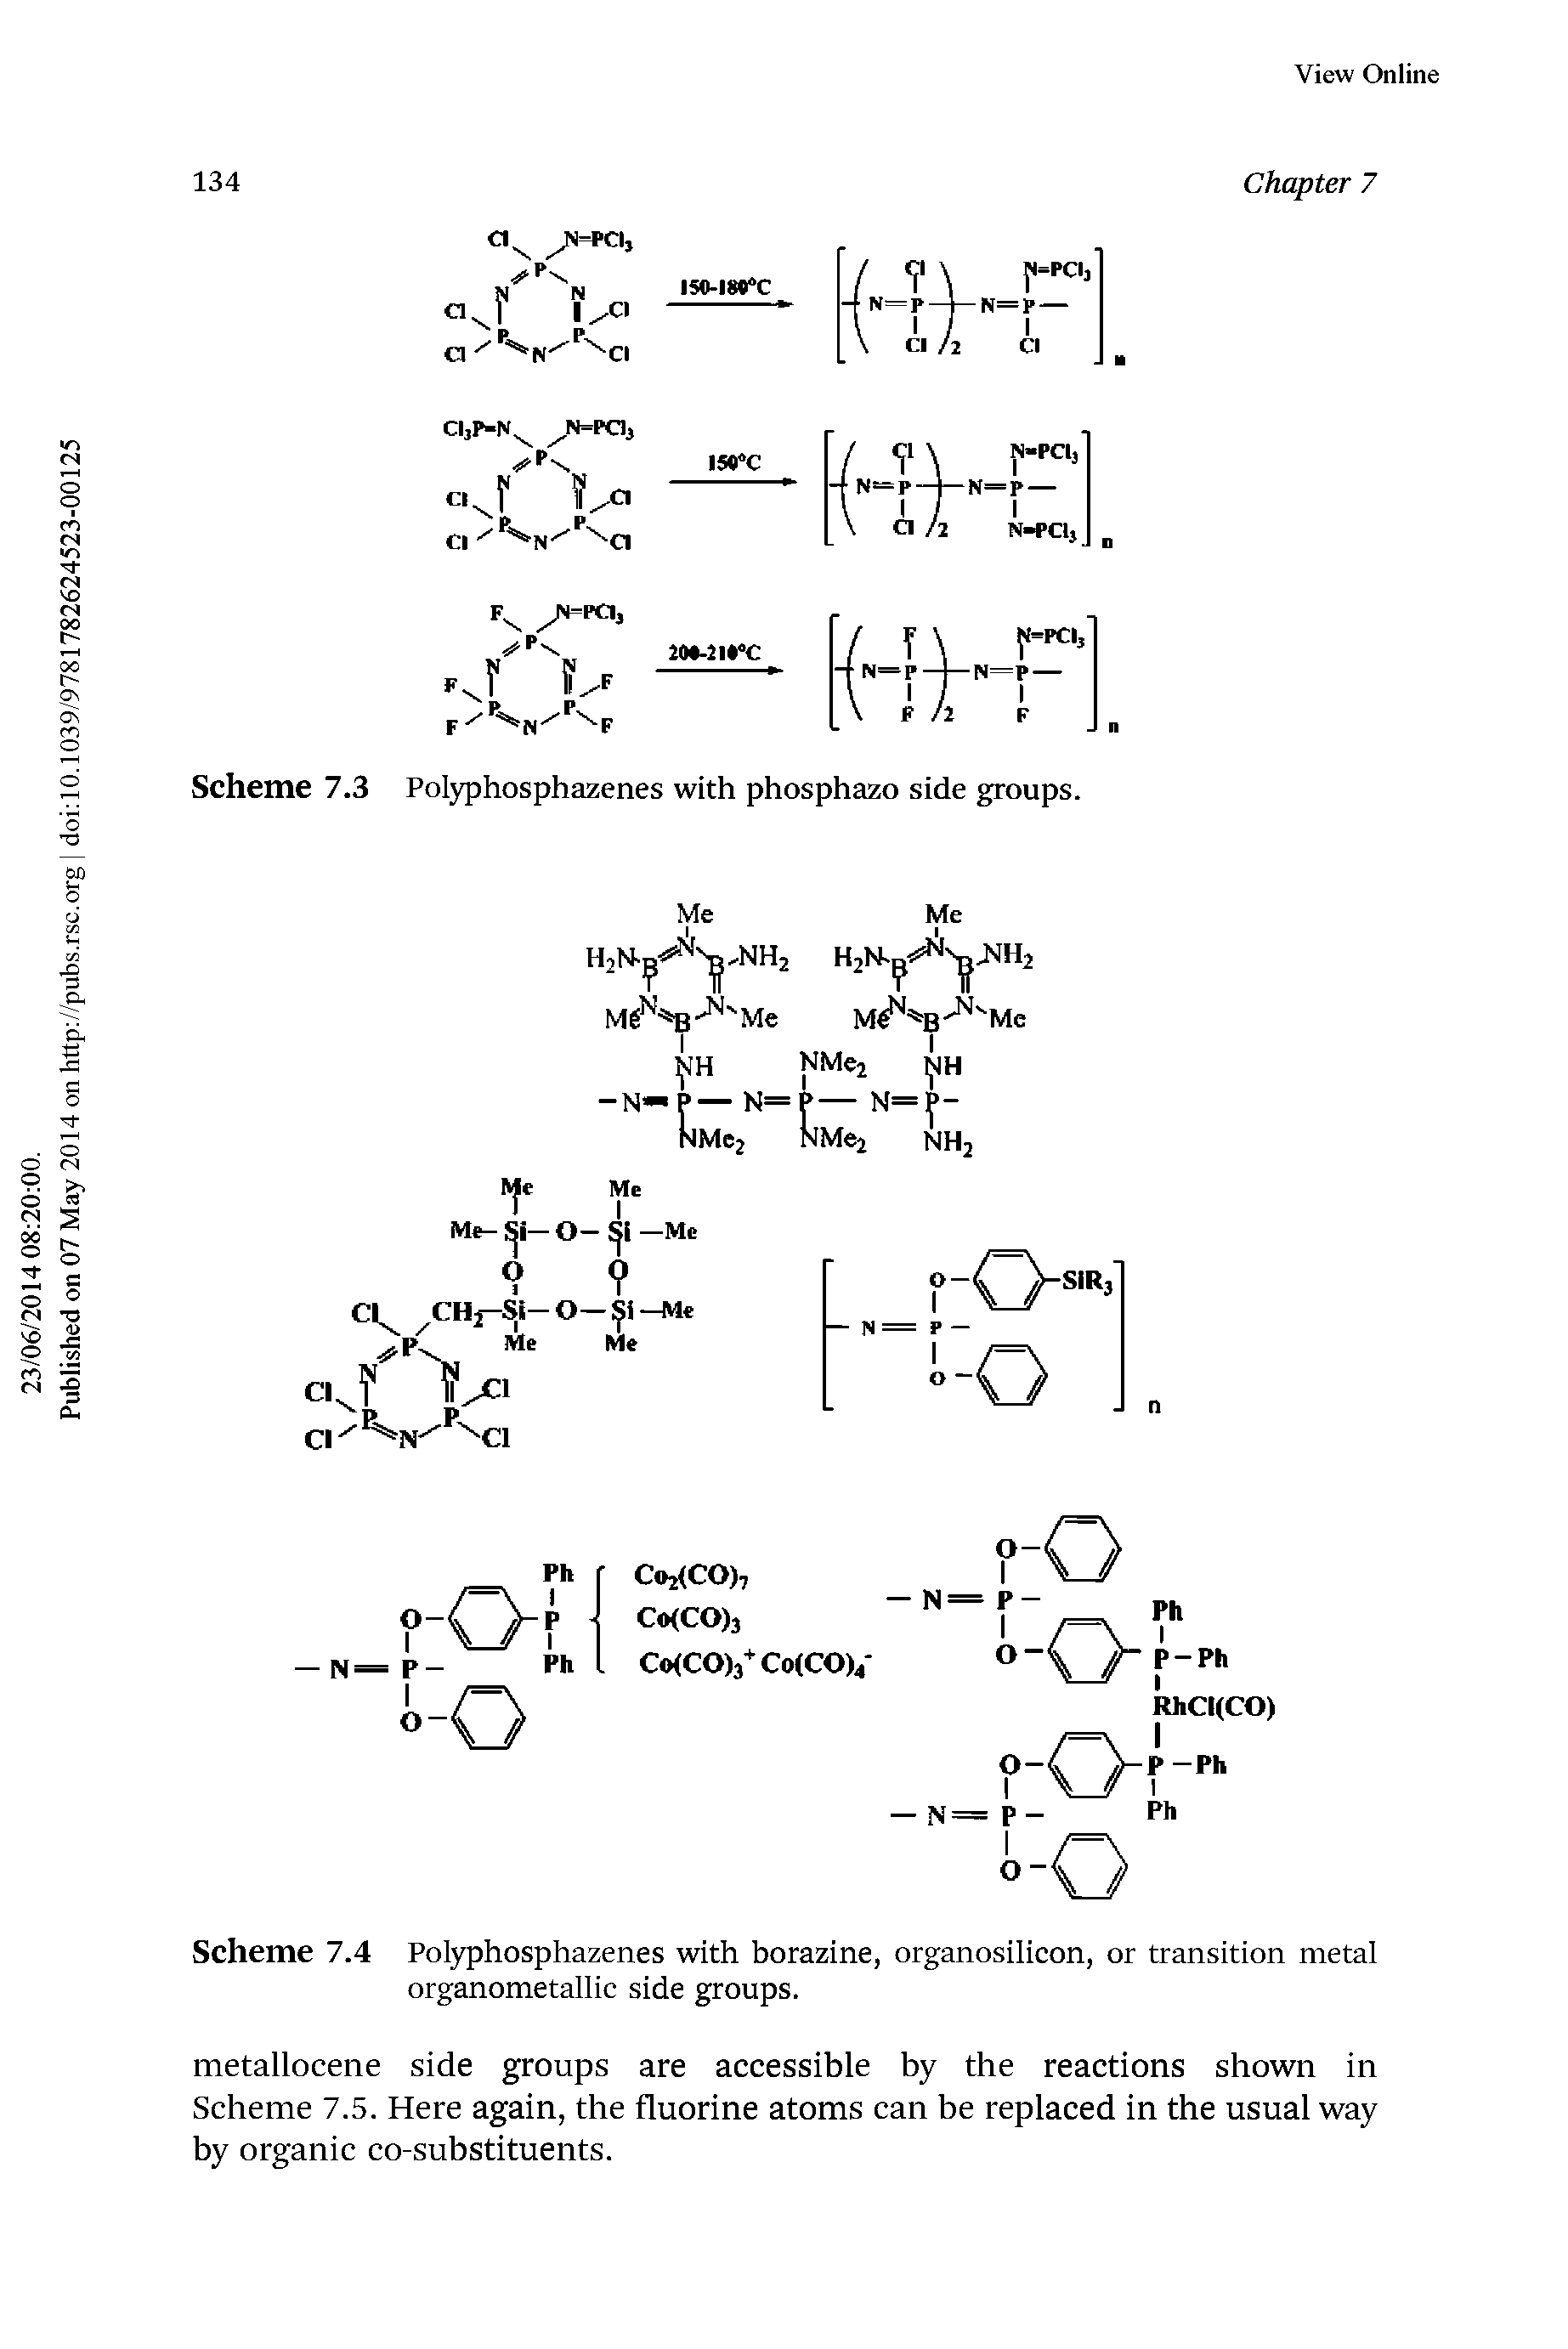 Scheme 7.4 Polyphosphazenes with borazine, organosilicon, or transition metal organometallic side groups.